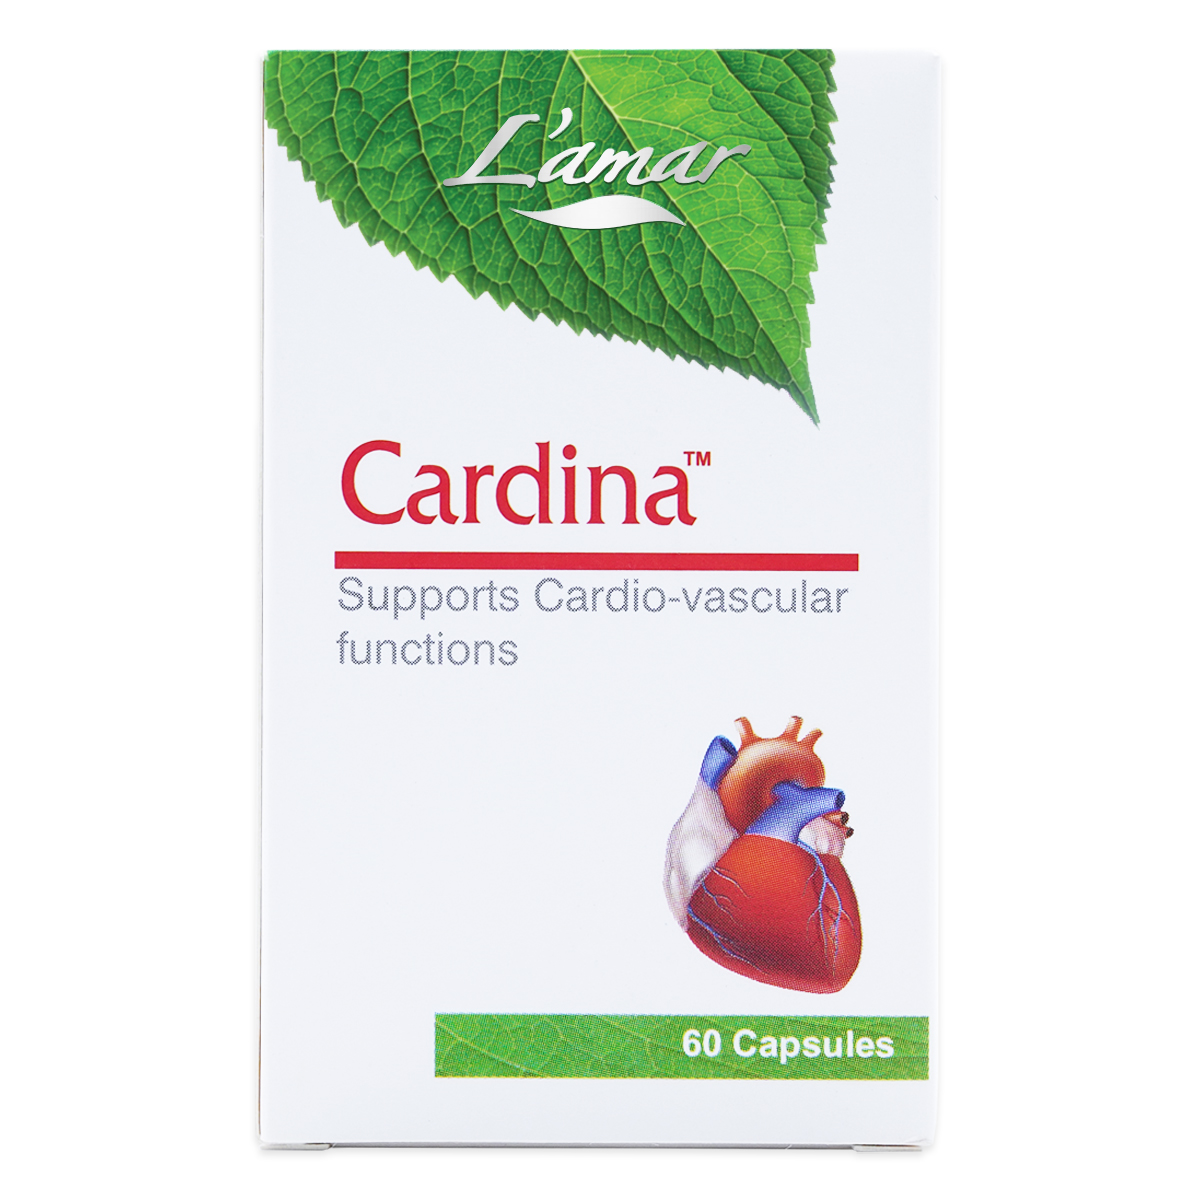 CARDINA CAPSULE 60'S for cardiac care